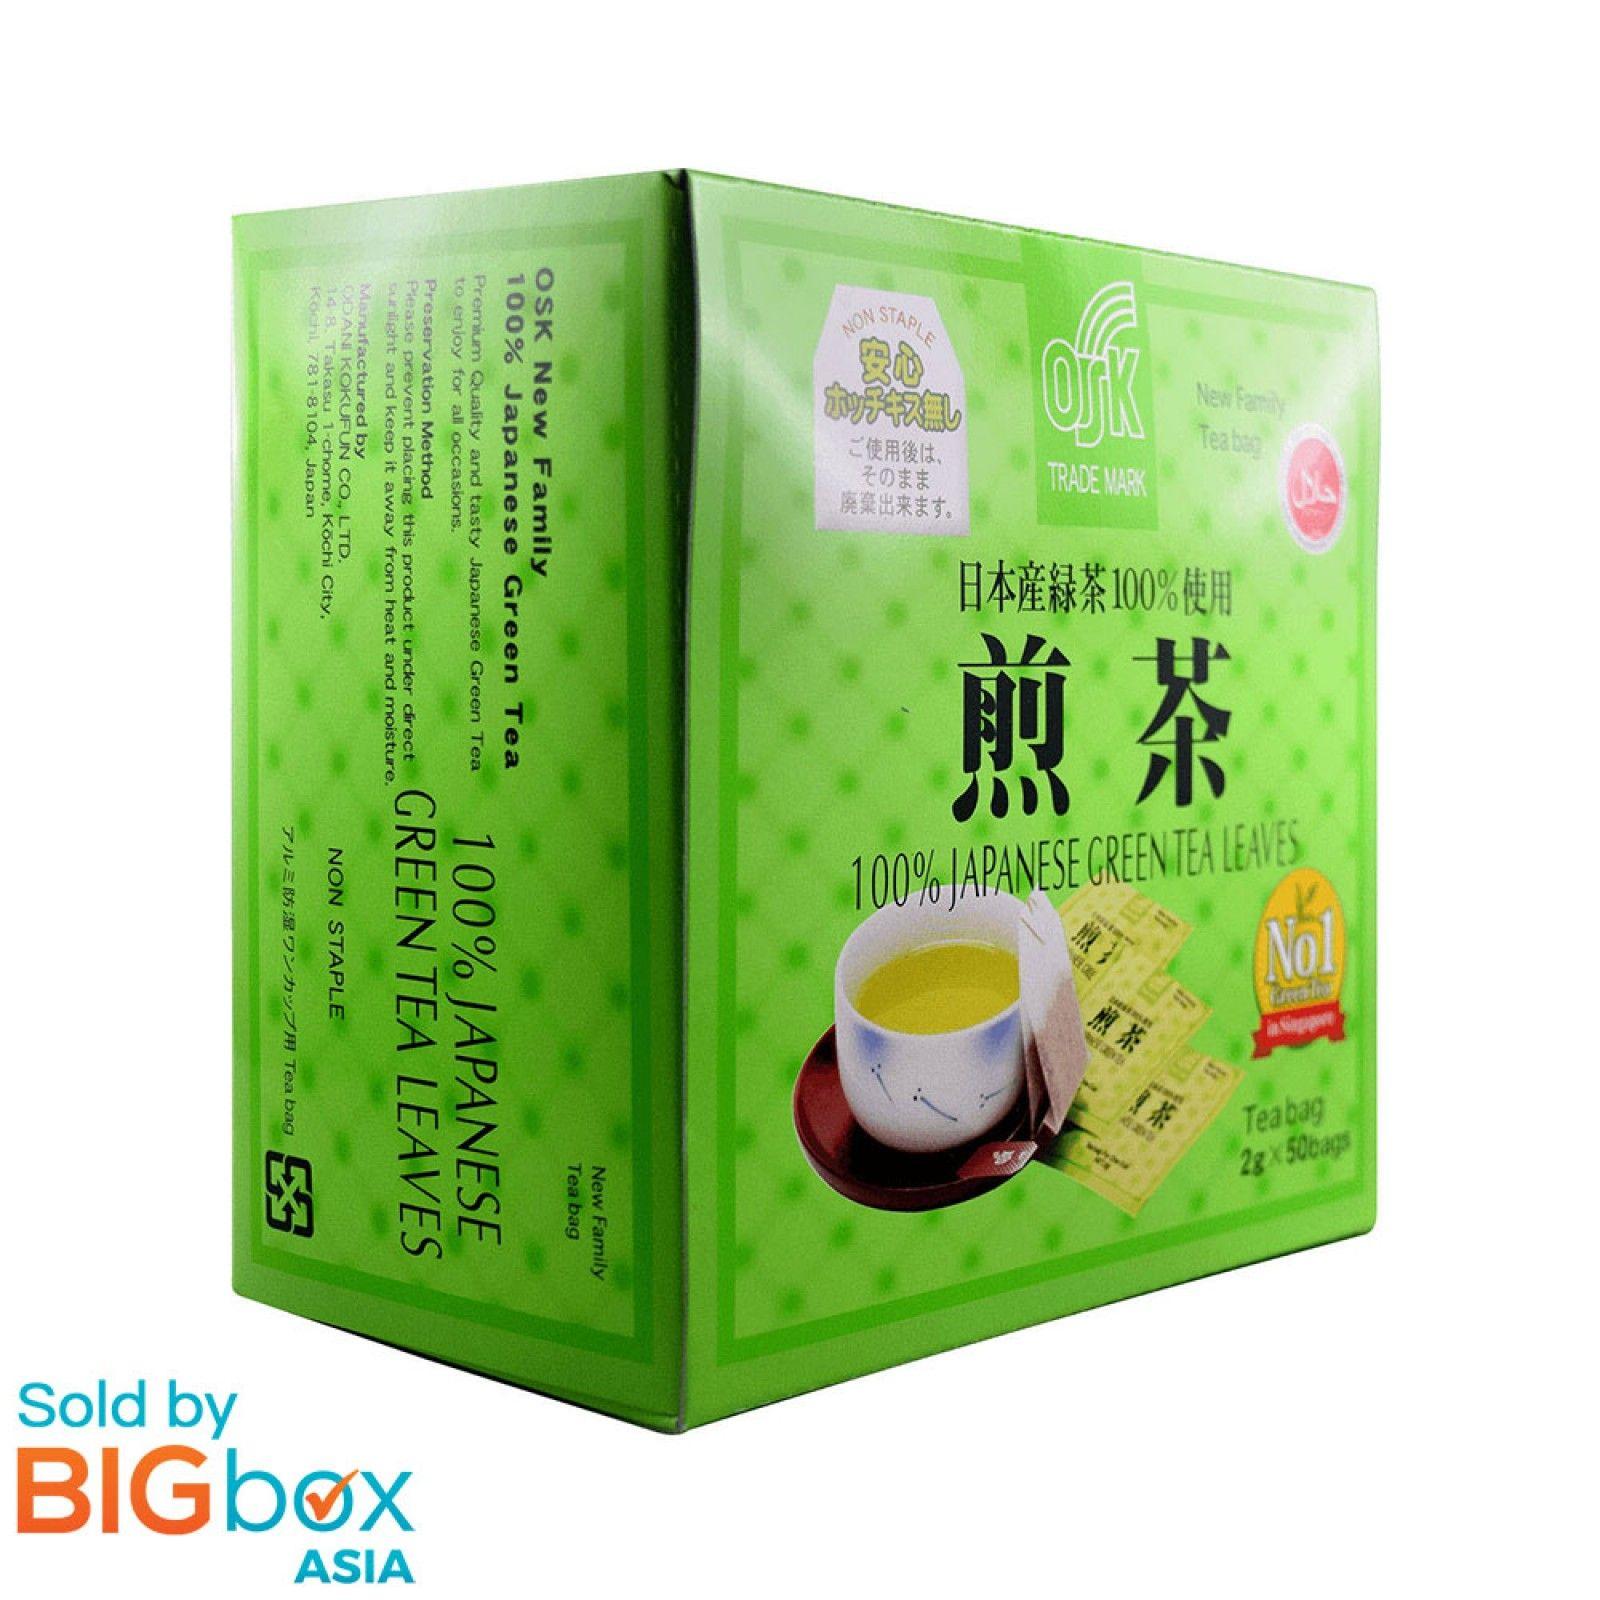 Japan Red Sun Green Tea Logo - HALAL OSK Green Tea 2g x 50packs